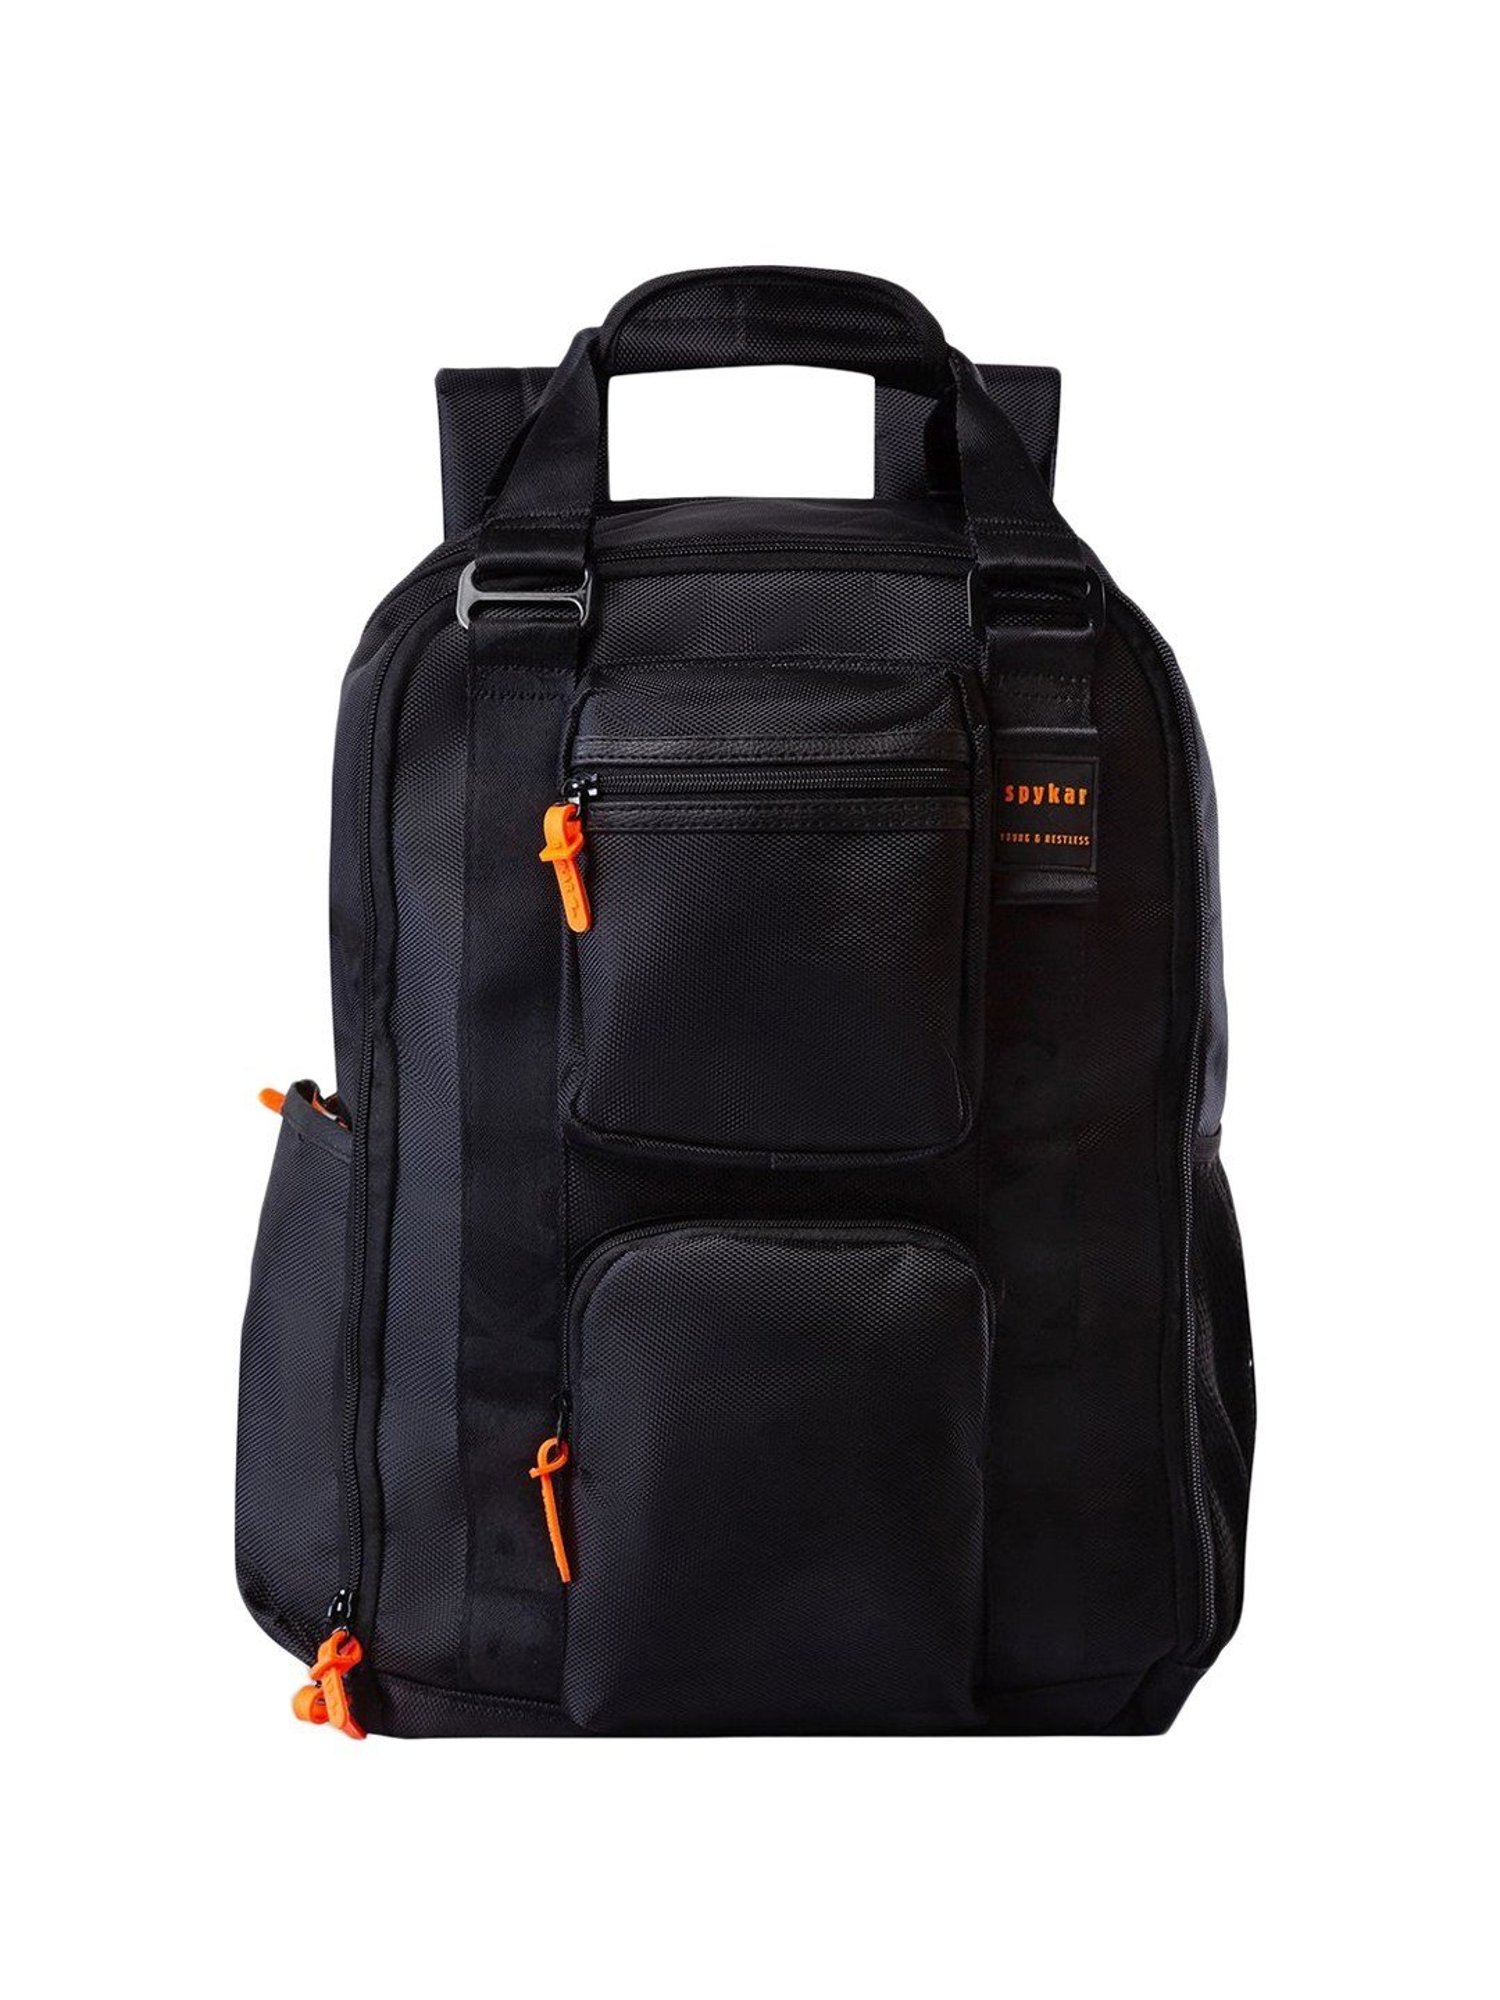 Buy Spykar Polyester Backpack (Black_SPYBGONS1854BlackFREE) at Amazon.in